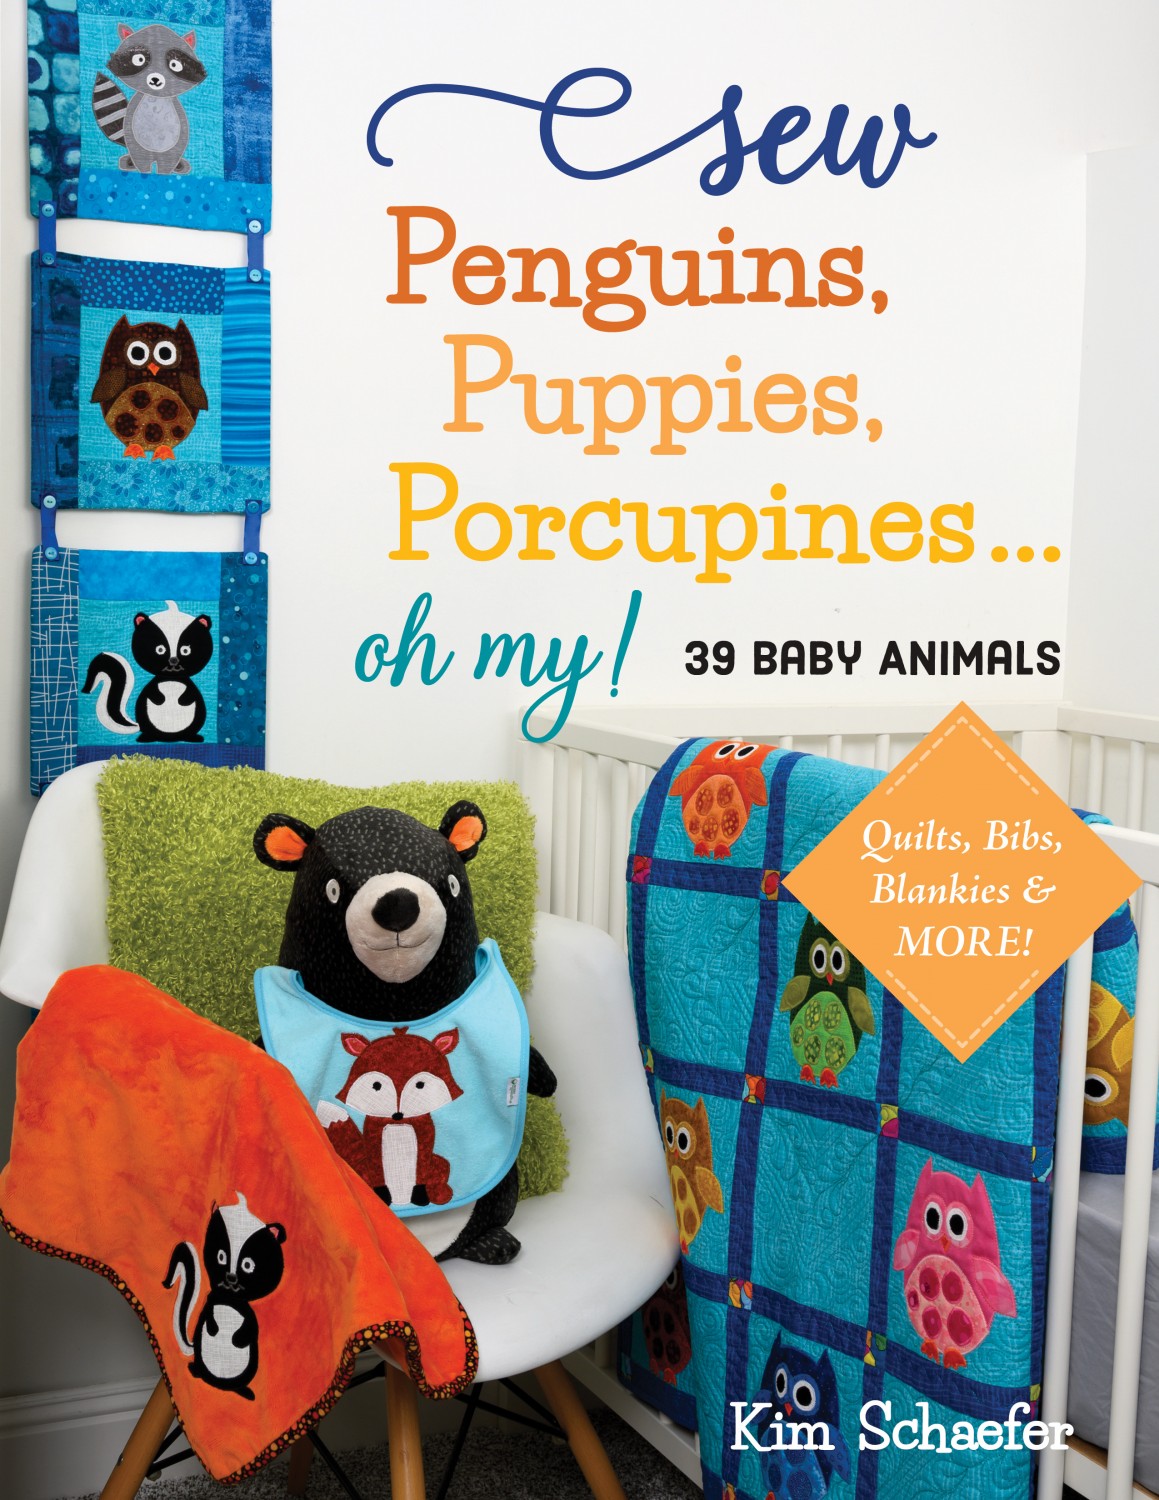 Penguins, Puppies, Porcupines by Kim Schaefer